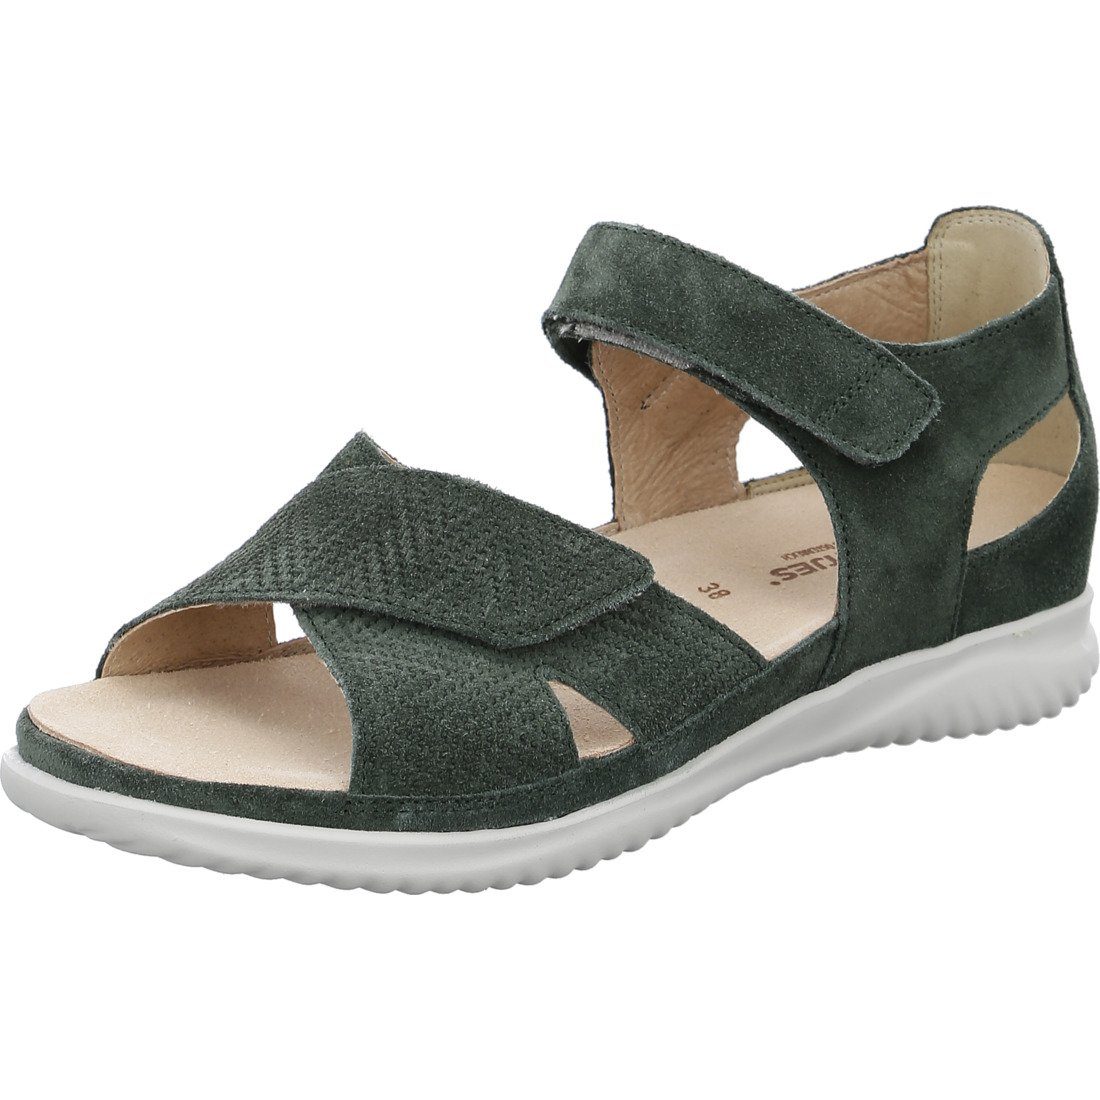 Hartjes Hartjes 048736 Sandalette Velours - Breeze Sandalette Schuhe, grün